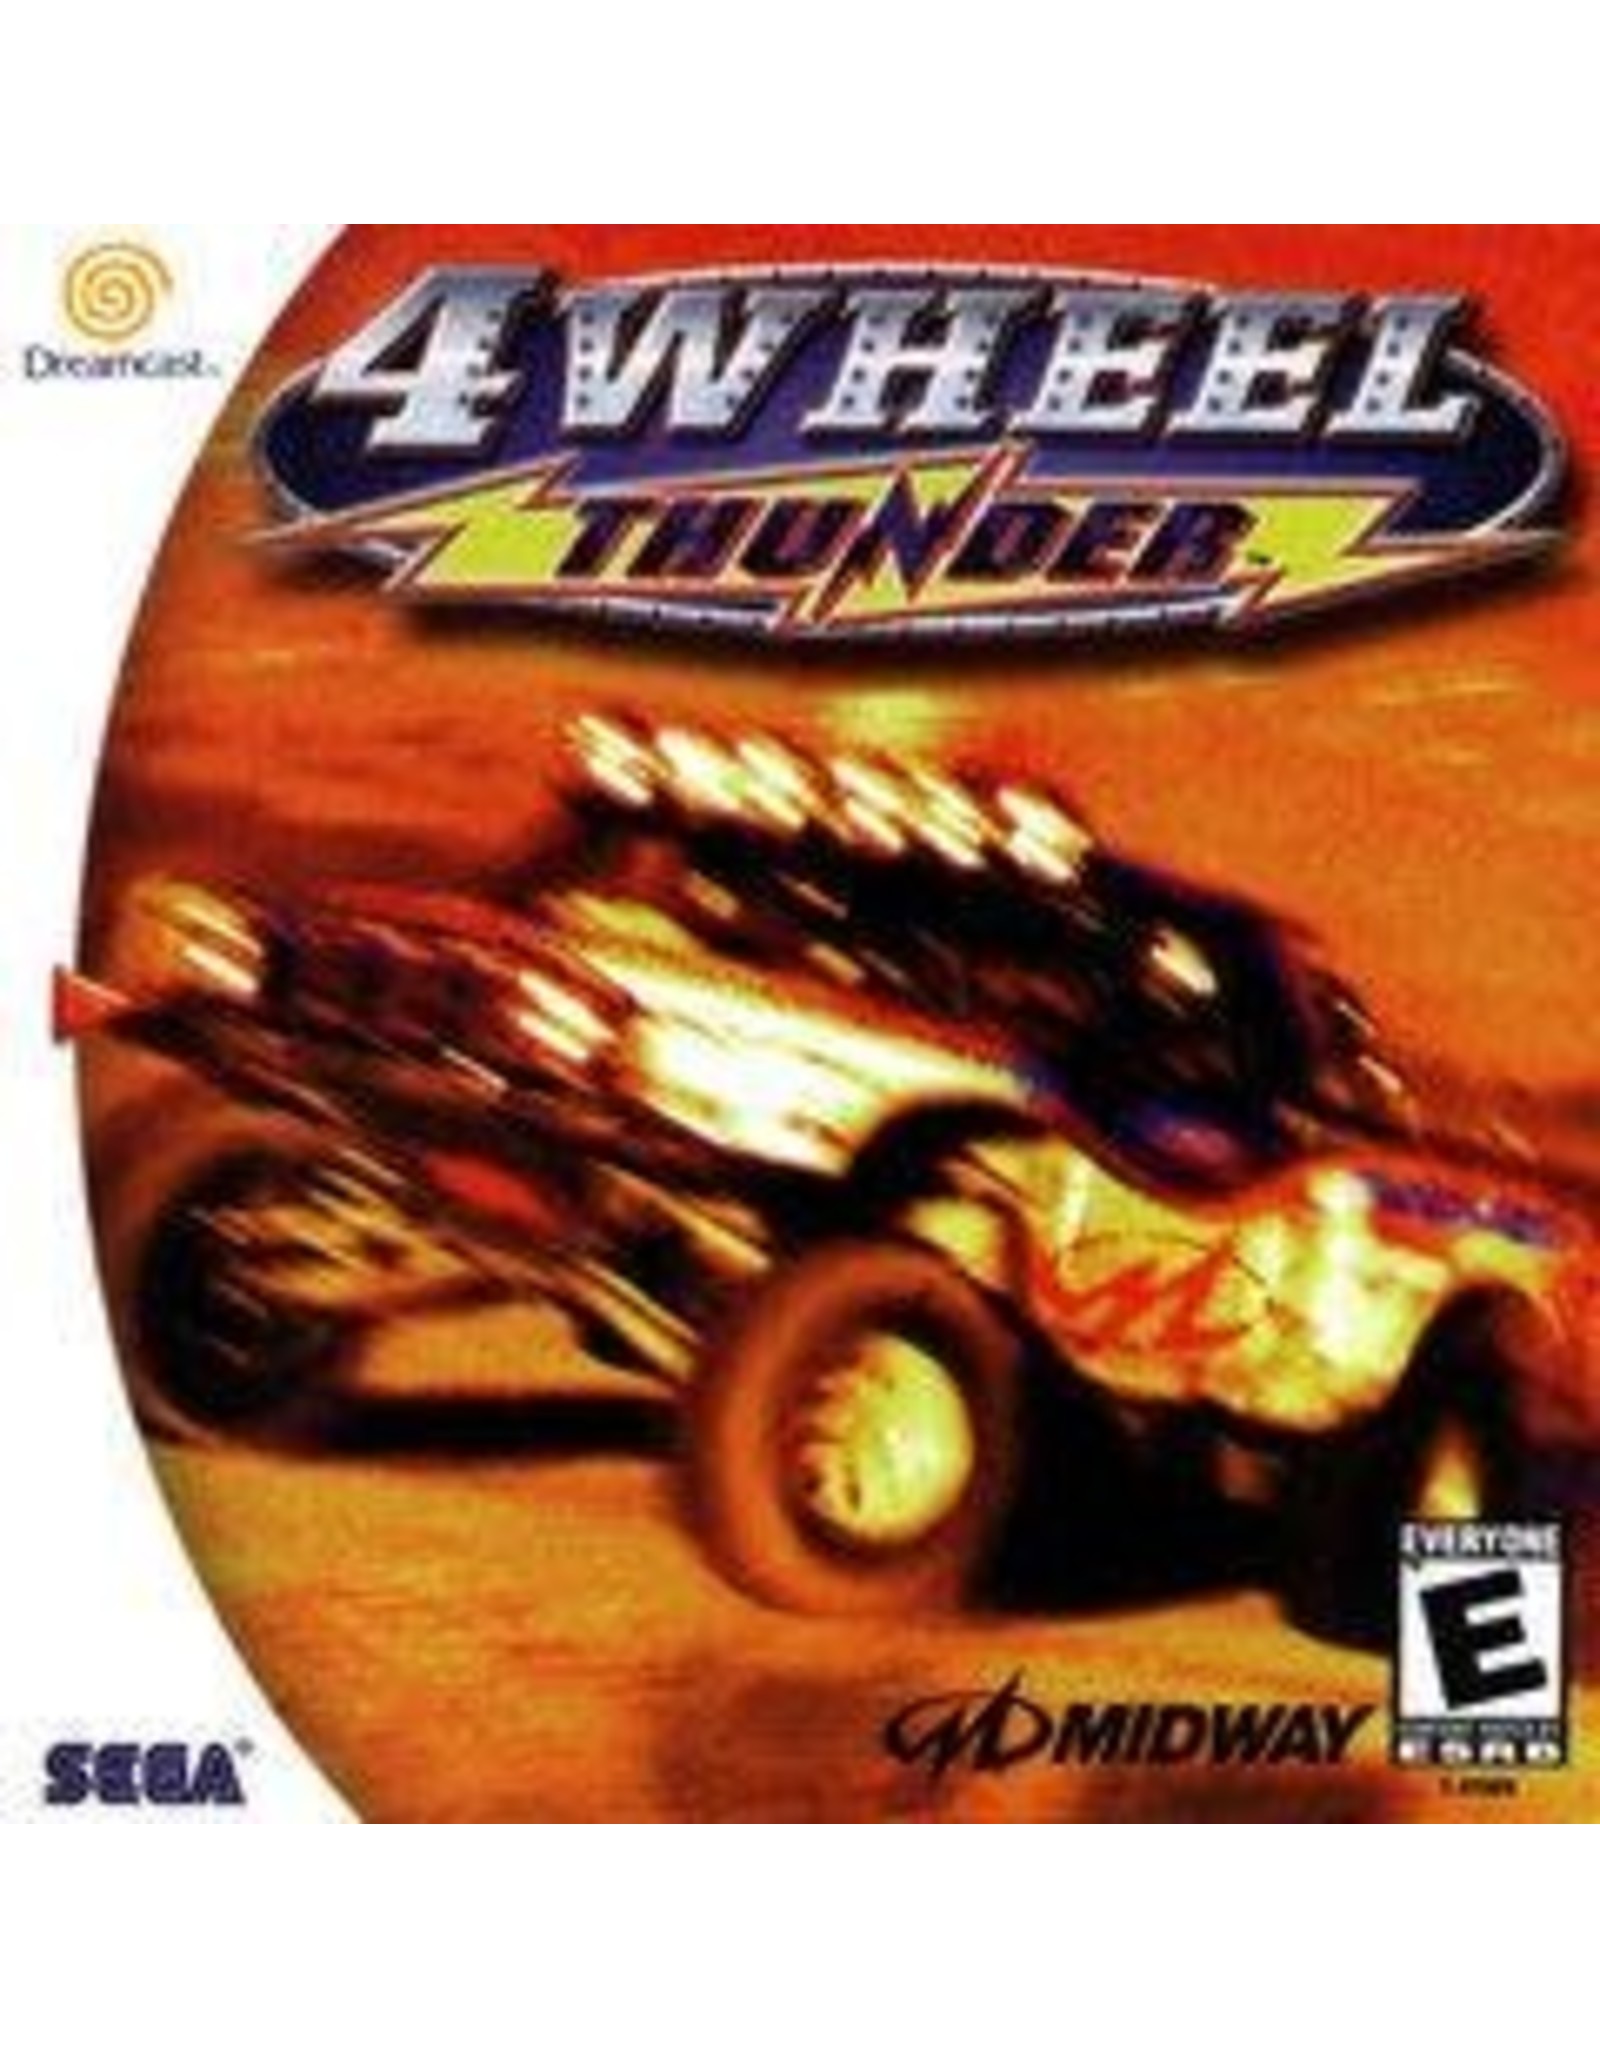 Sega Dreamcast 4 Wheel Thunder (CiB)